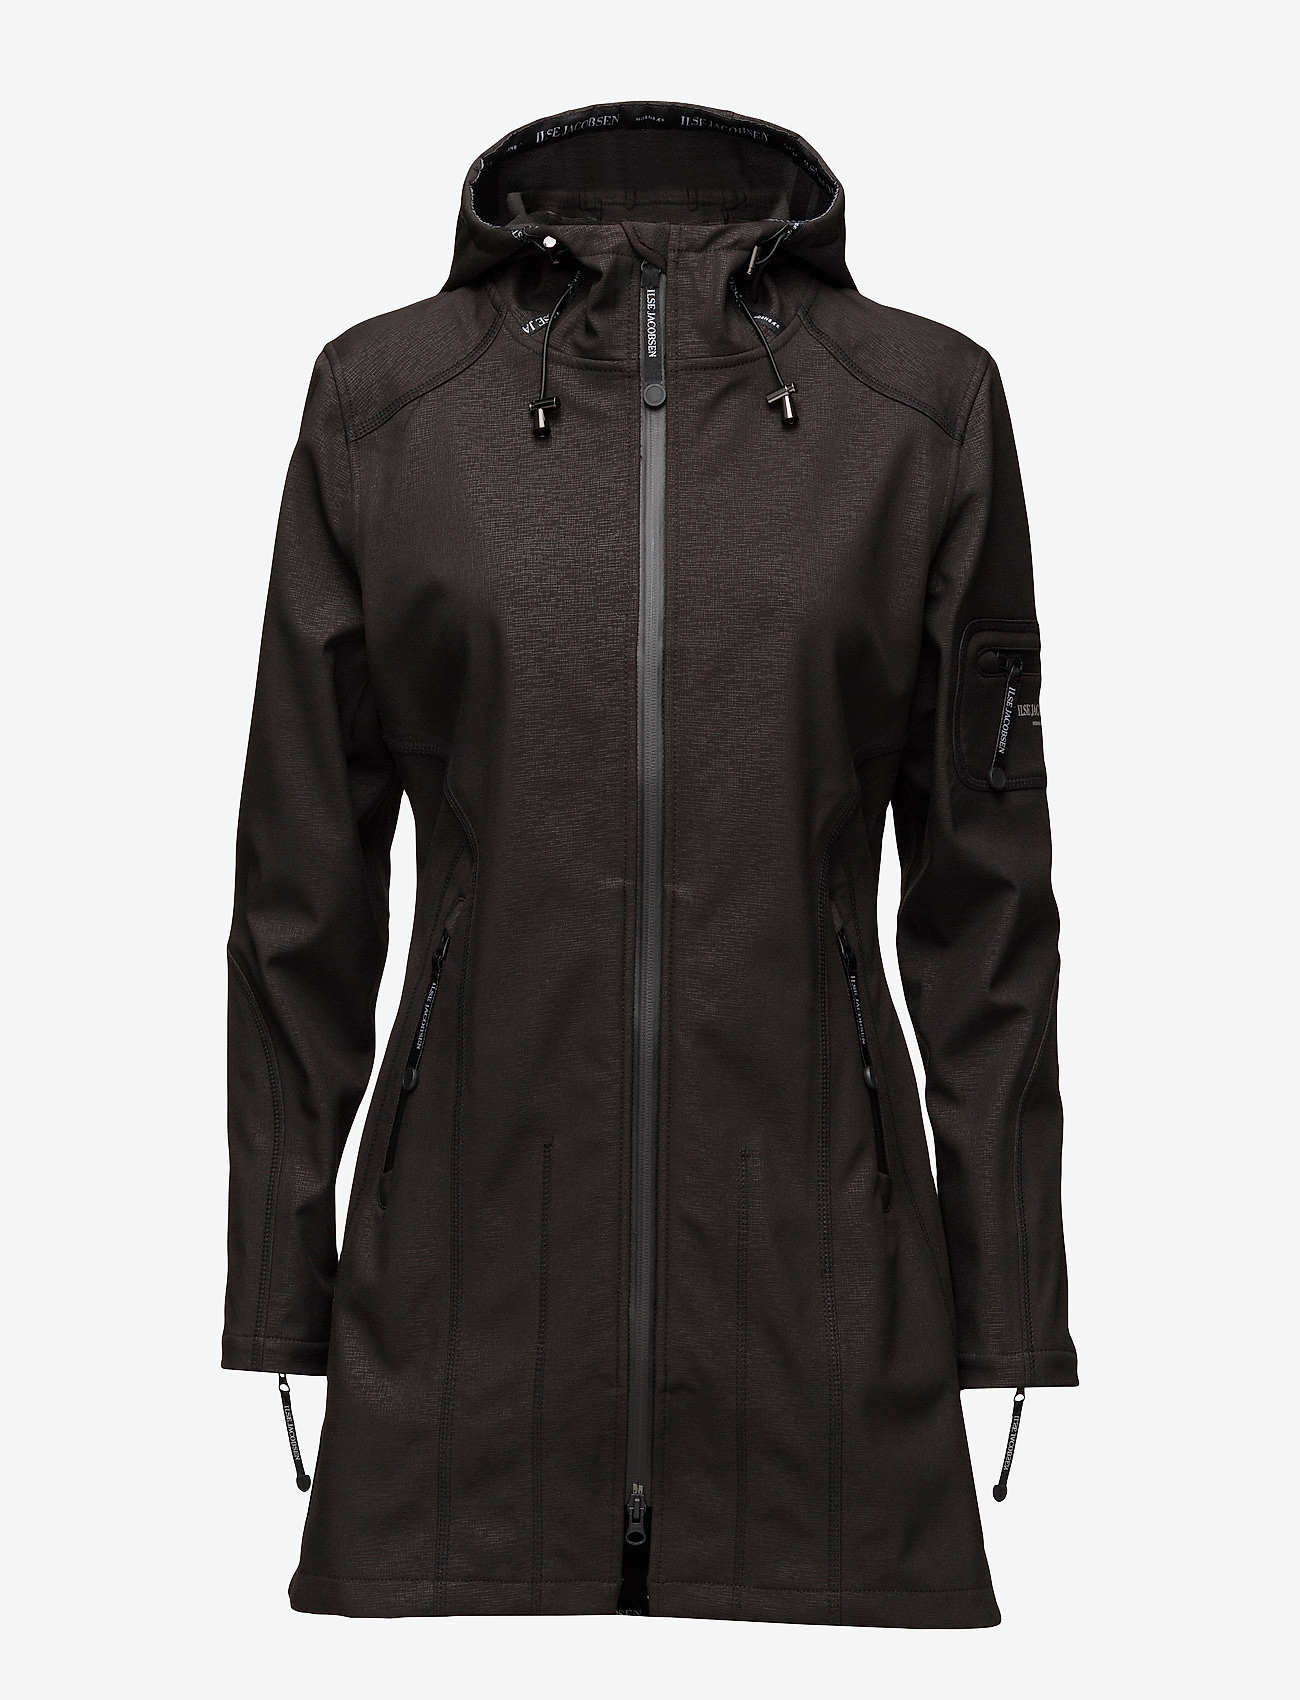 Ilse Jacobsen - 3/4 RAINCOAT - rain coats - black - 1